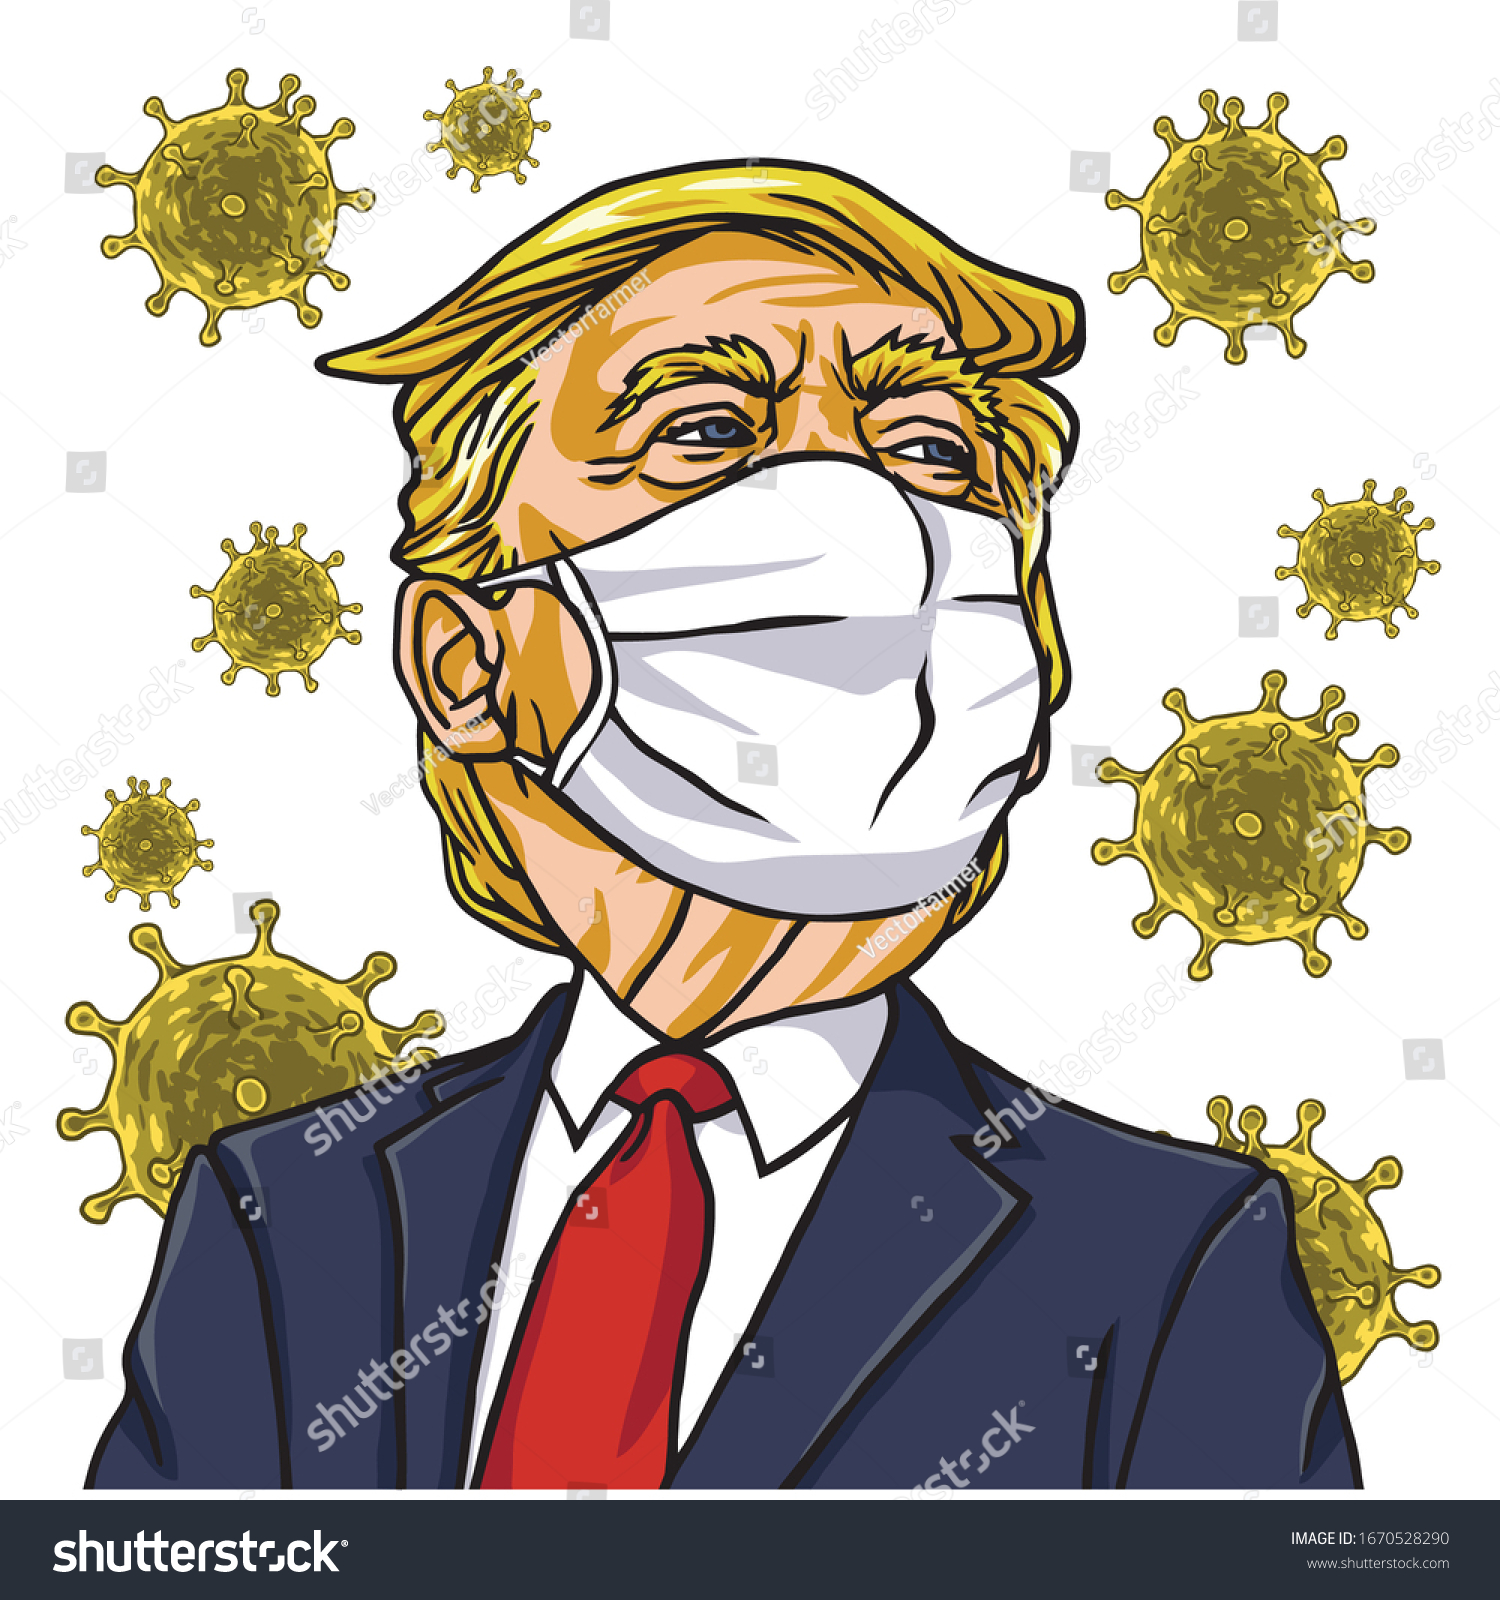 Donald Trump Wearing Corona Virus Mask Stock Vector (Royalty Free ...